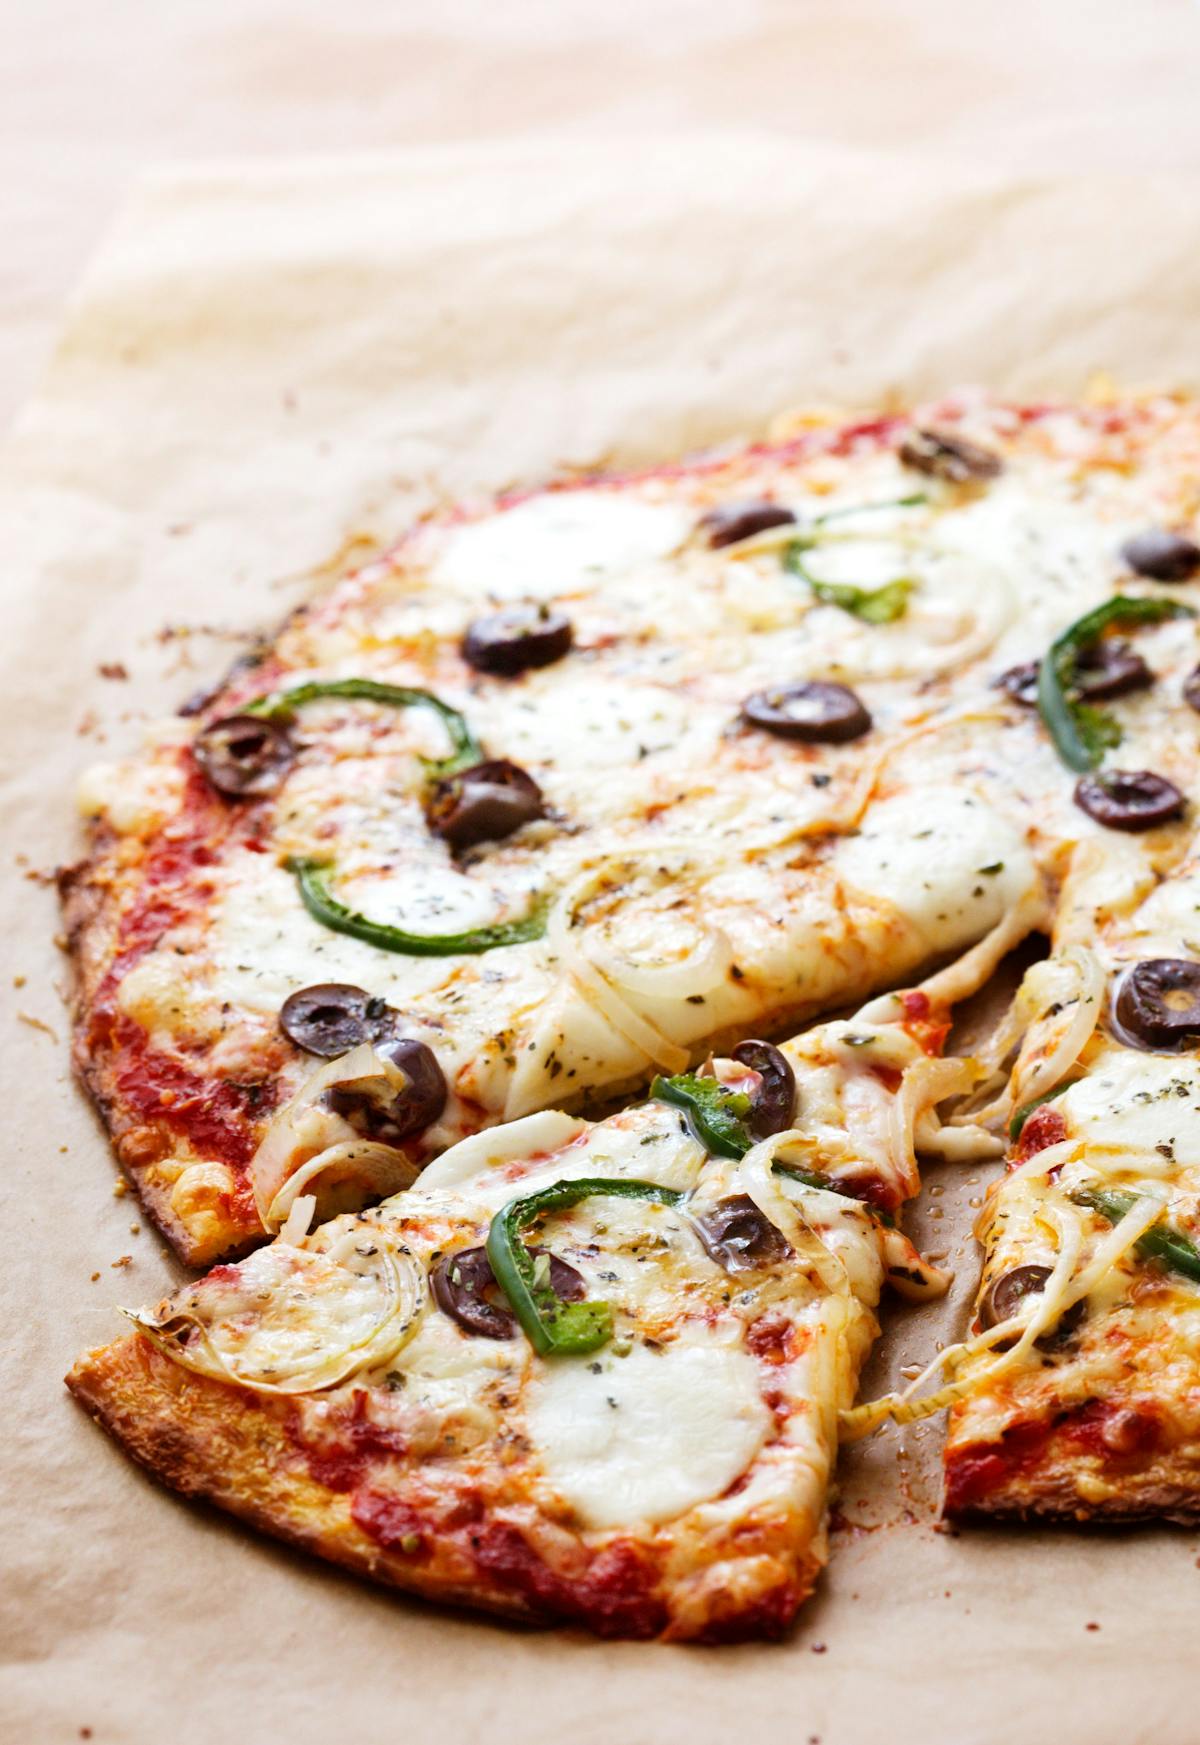 Blomkålspizza med grön paprika och oliver